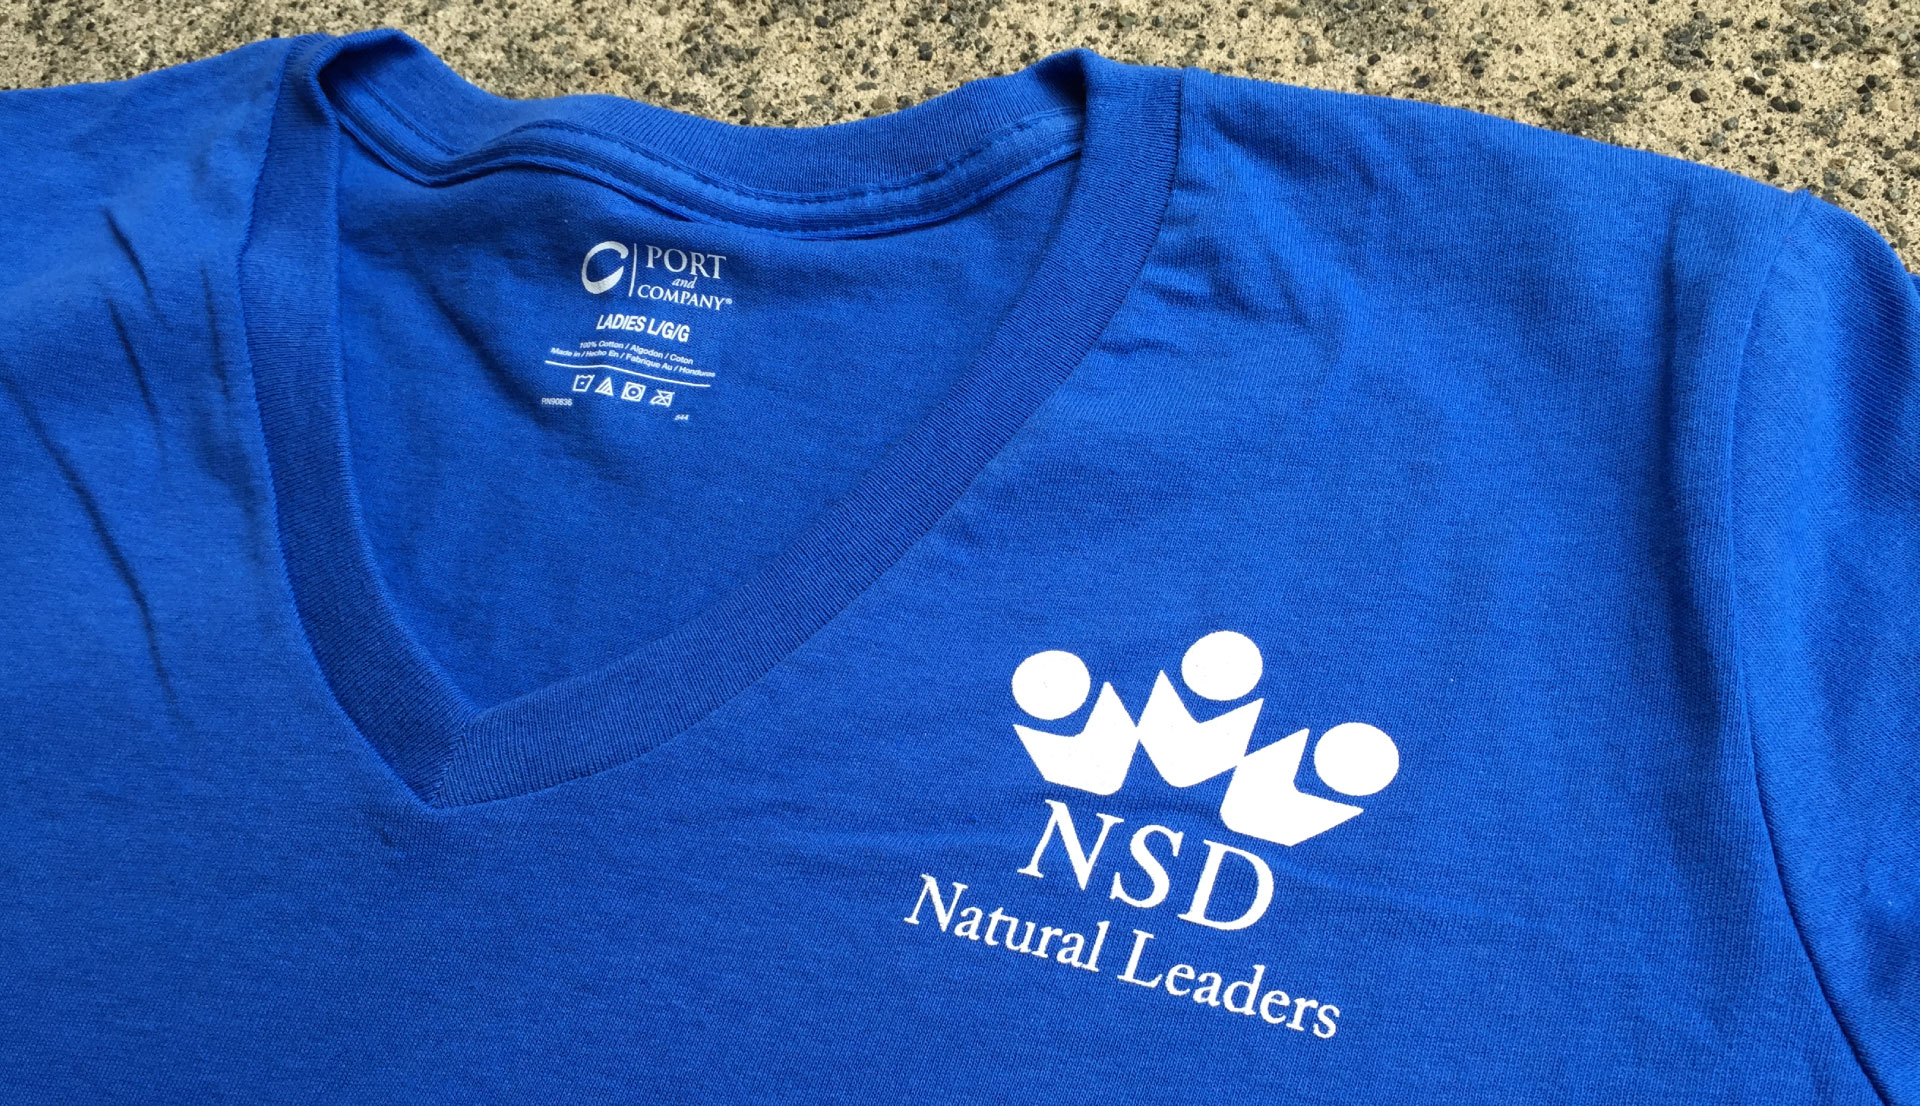 NSD Natural Leaders